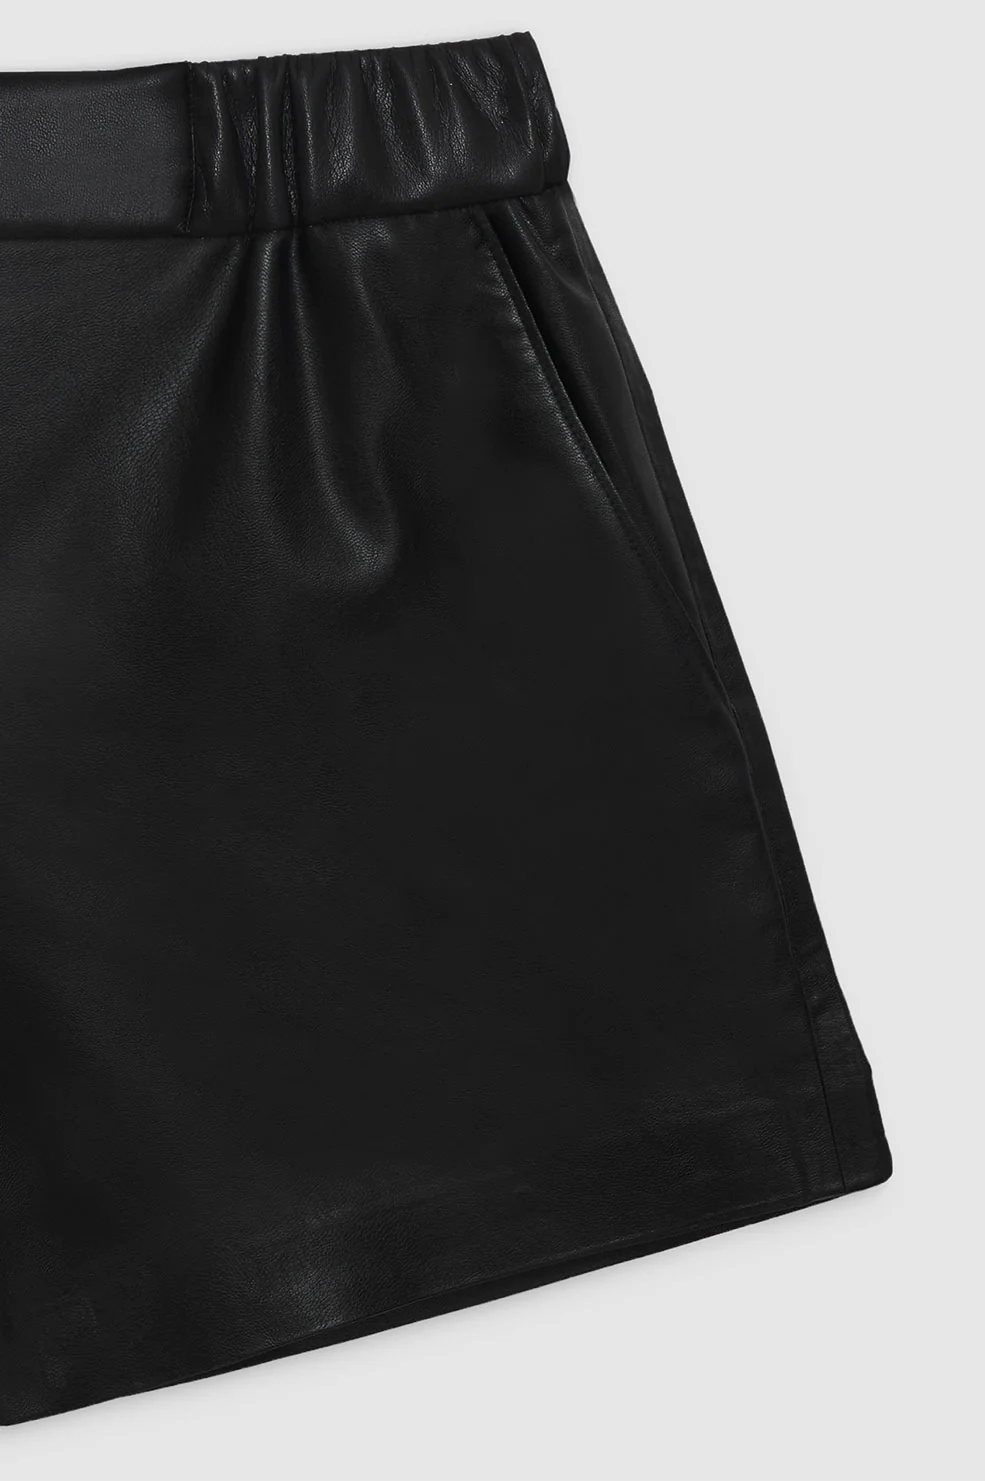 Anine Bing - Koa Short in Black Vegan Leather